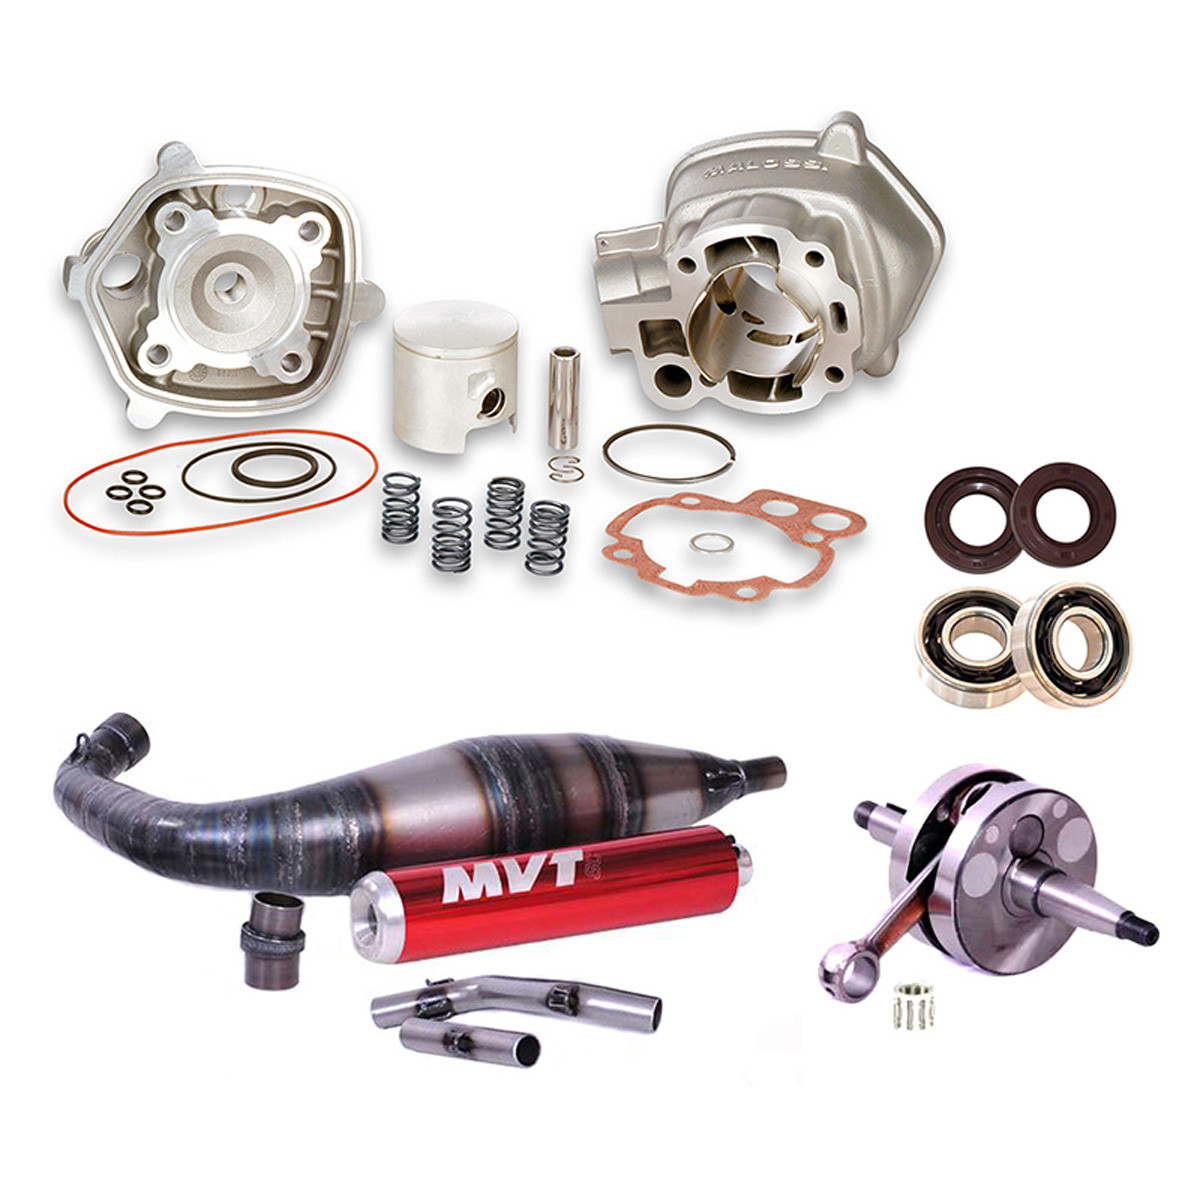 Pack Moteur & Pot 80cc AM6 - Kit MALOSSI MHR + Pot & Vilebrequin MVT